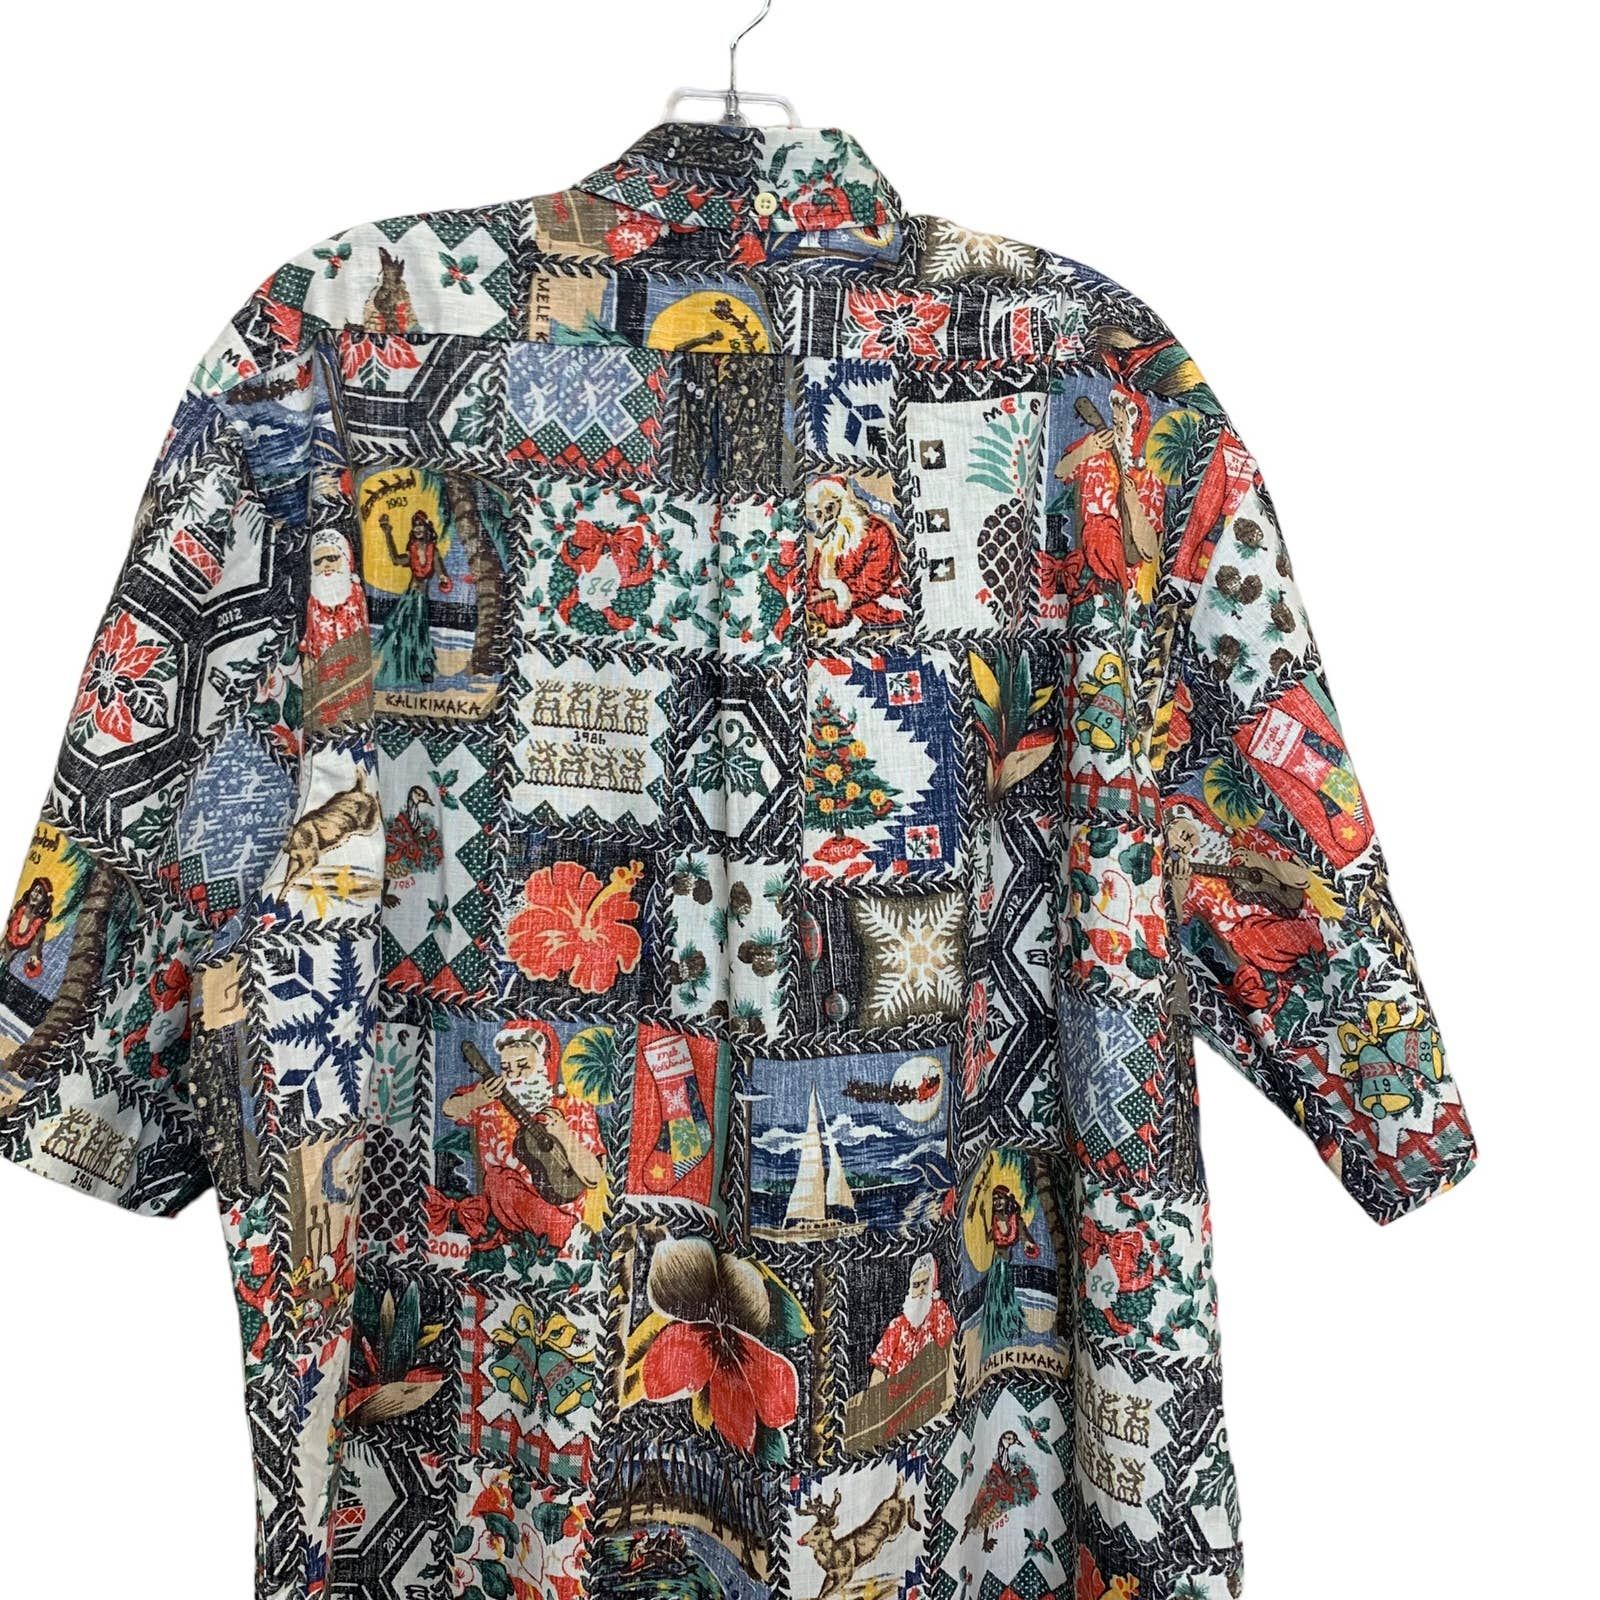 Reyn Spooner Reyn Spooner Mele Kalikimaka Hawaiian Shirt Christmas SZ XXL Size US XXL / EU 58 / 5 - 6 Thumbnail